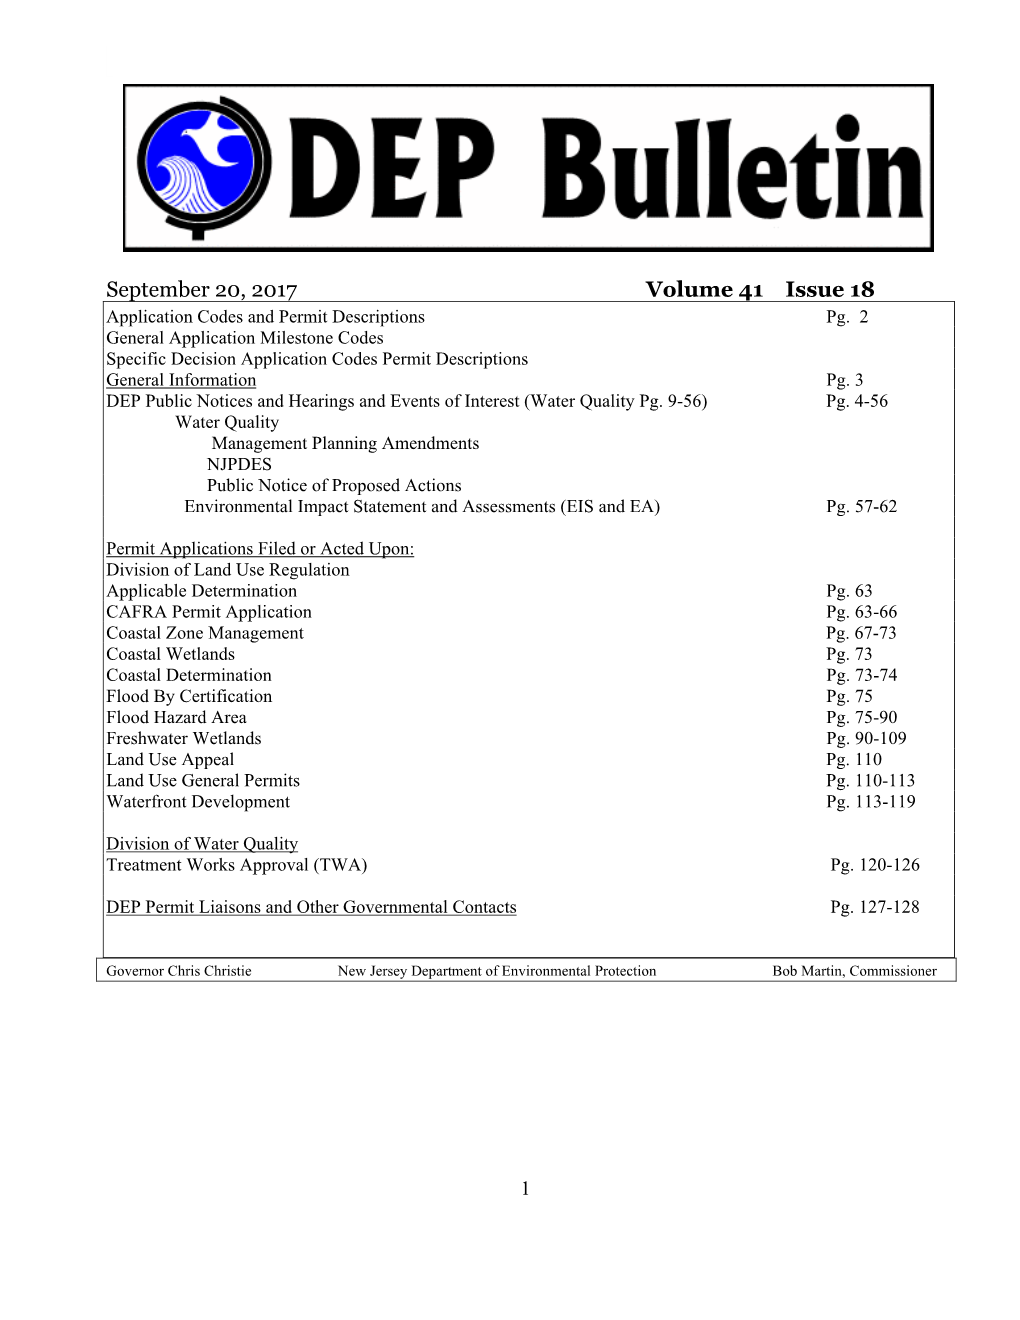 NJDEP-DEP Bulletin, 9/20/2017 Issue